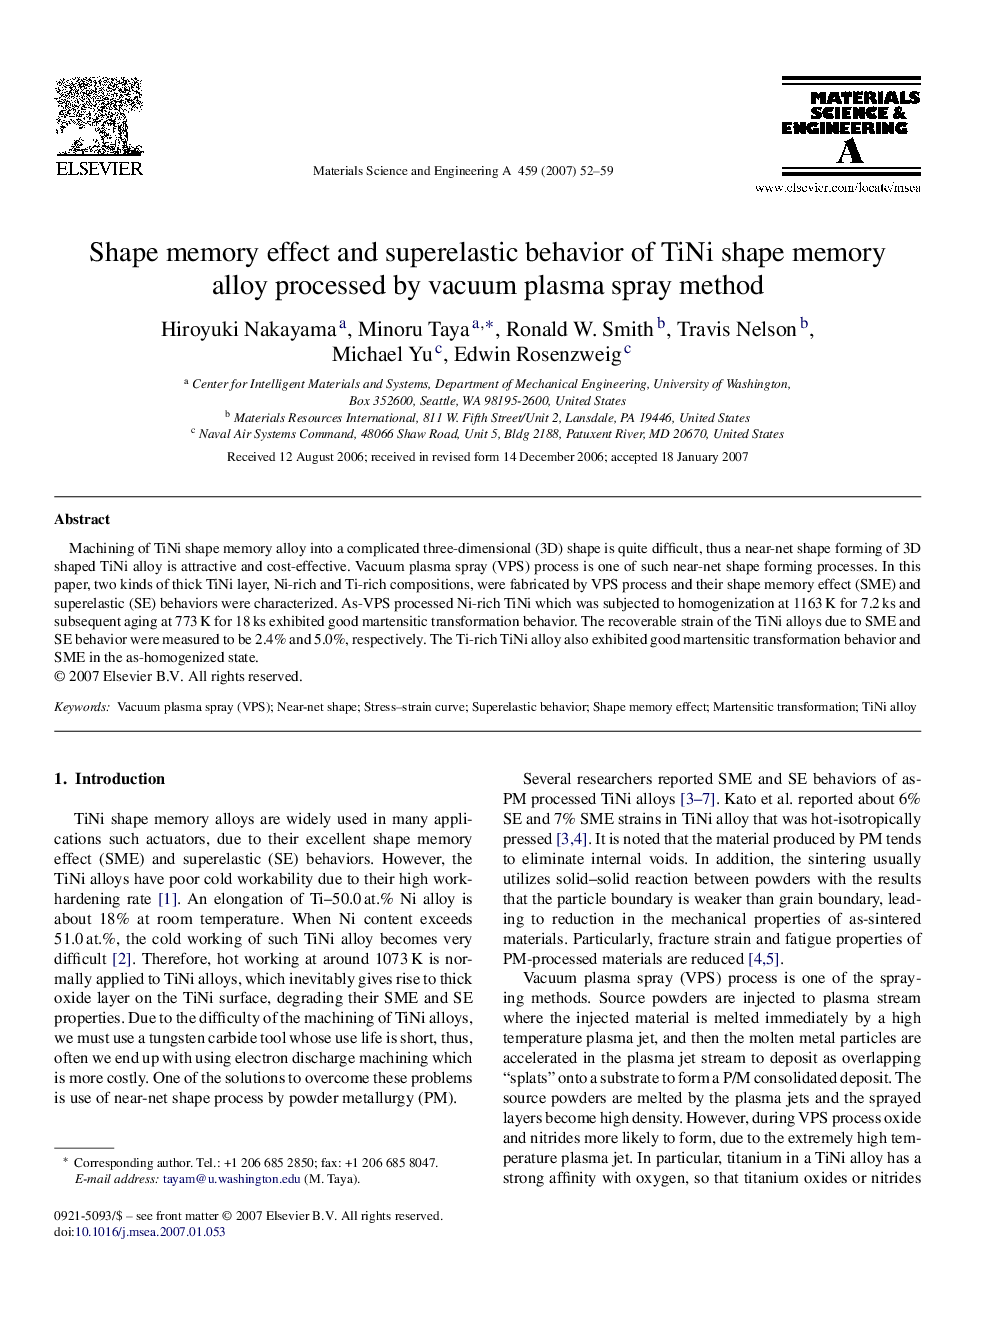 Shape memory effect and superelastic behavior of TiNi shape memory alloy processed by vacuum plasma spray method